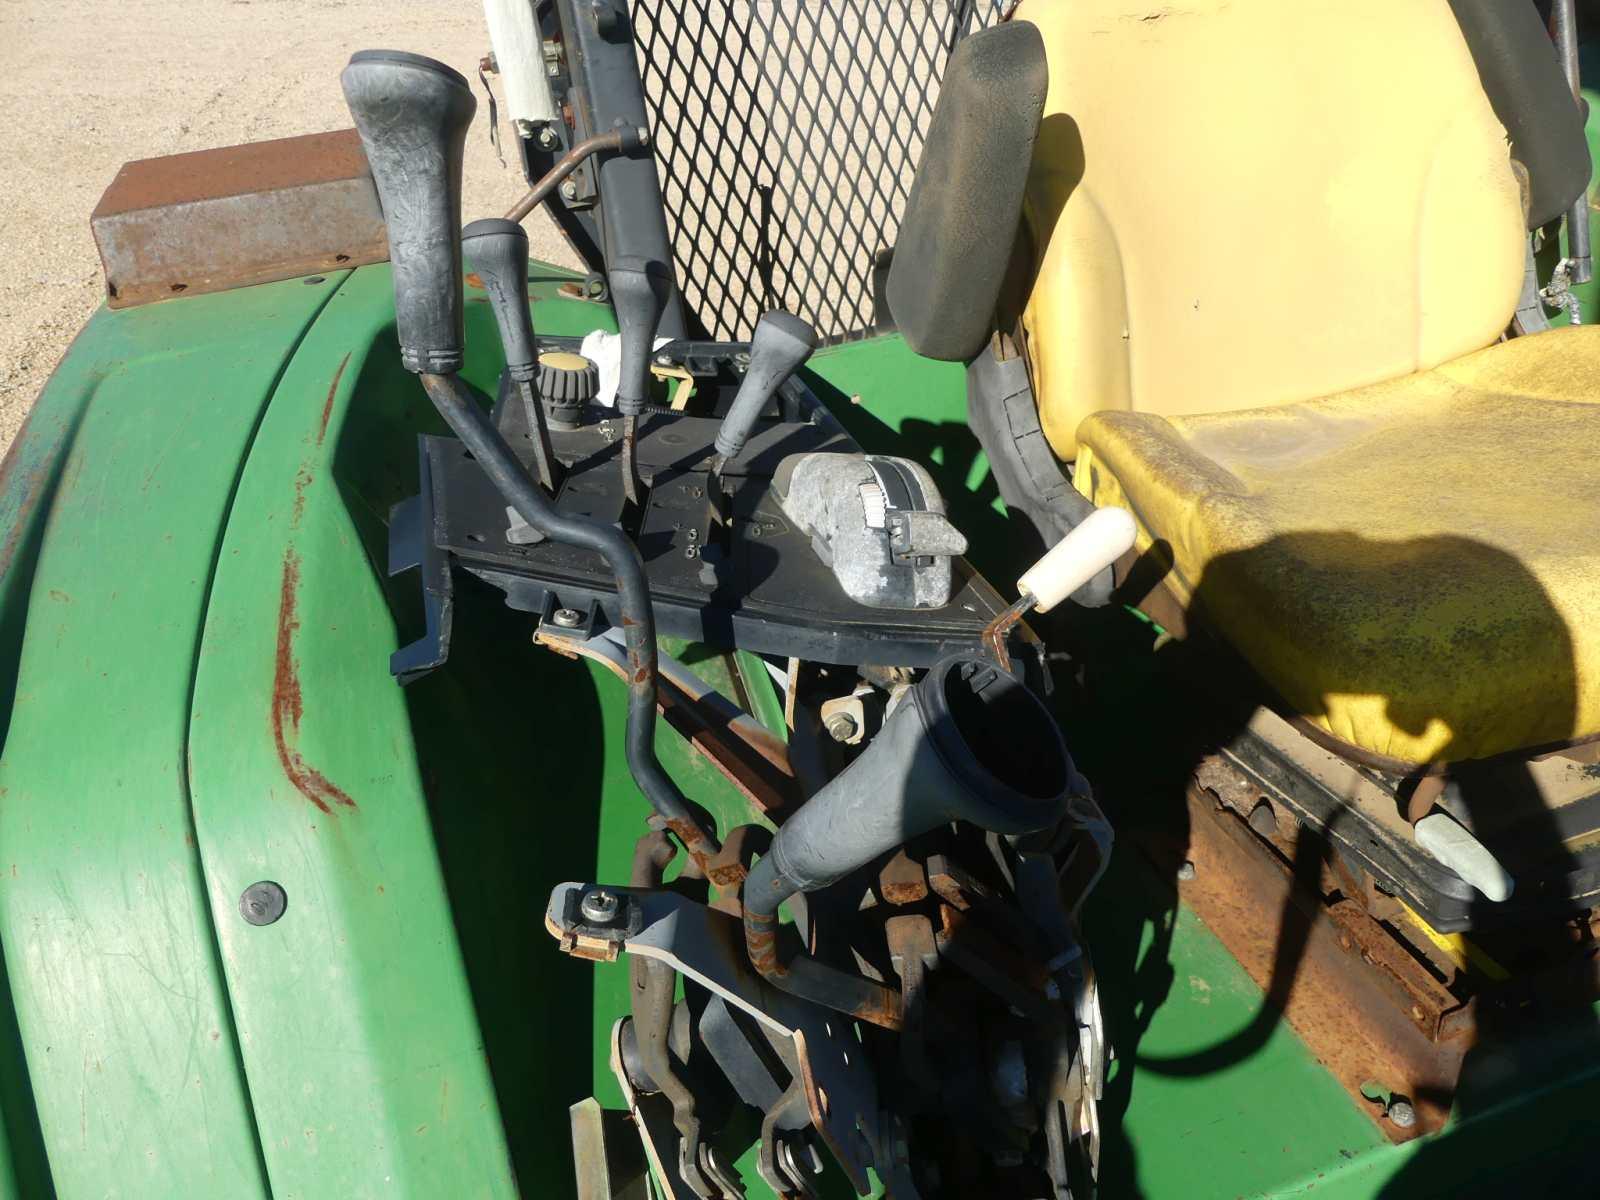 John Deere Tractor (Salvage): Sweeps, Runs, Trans. Problems, Meter Shows 15